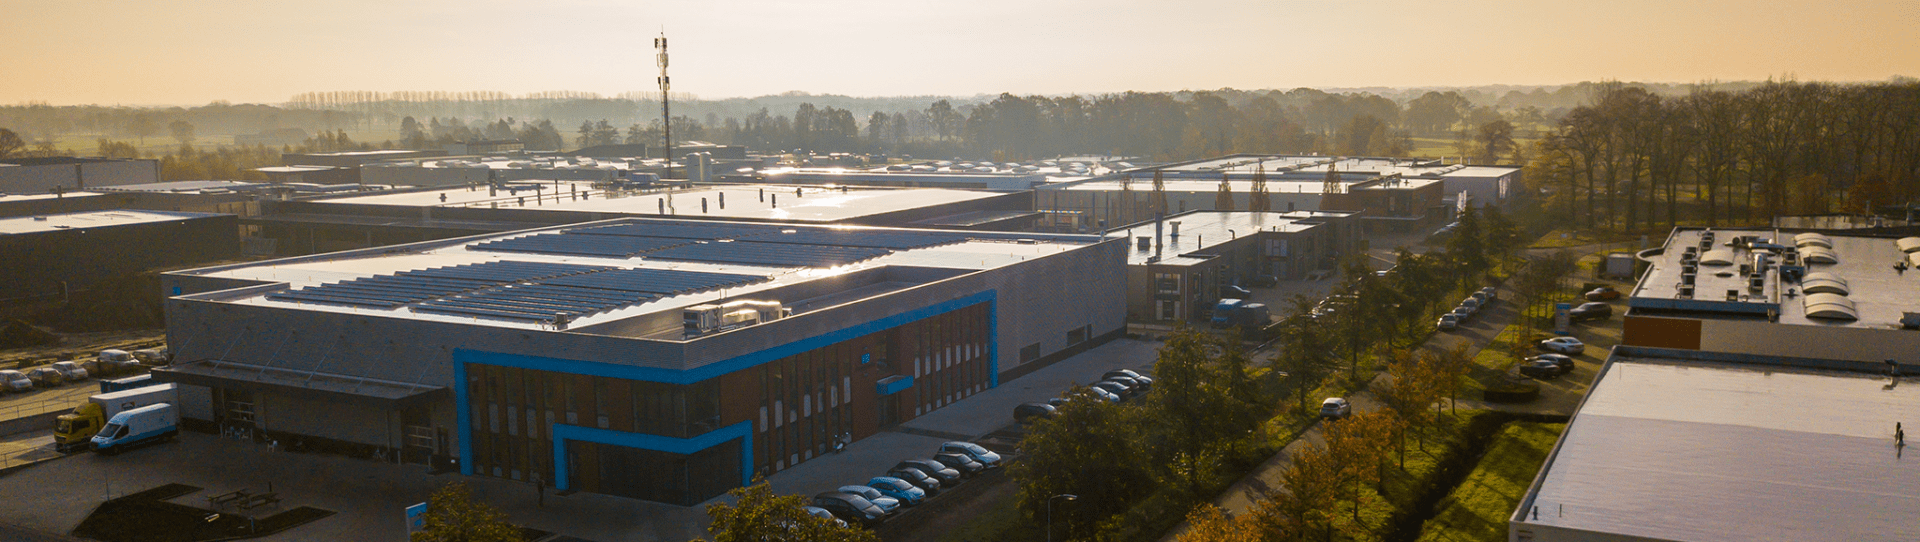 Drone shot: Varsseveld business premises